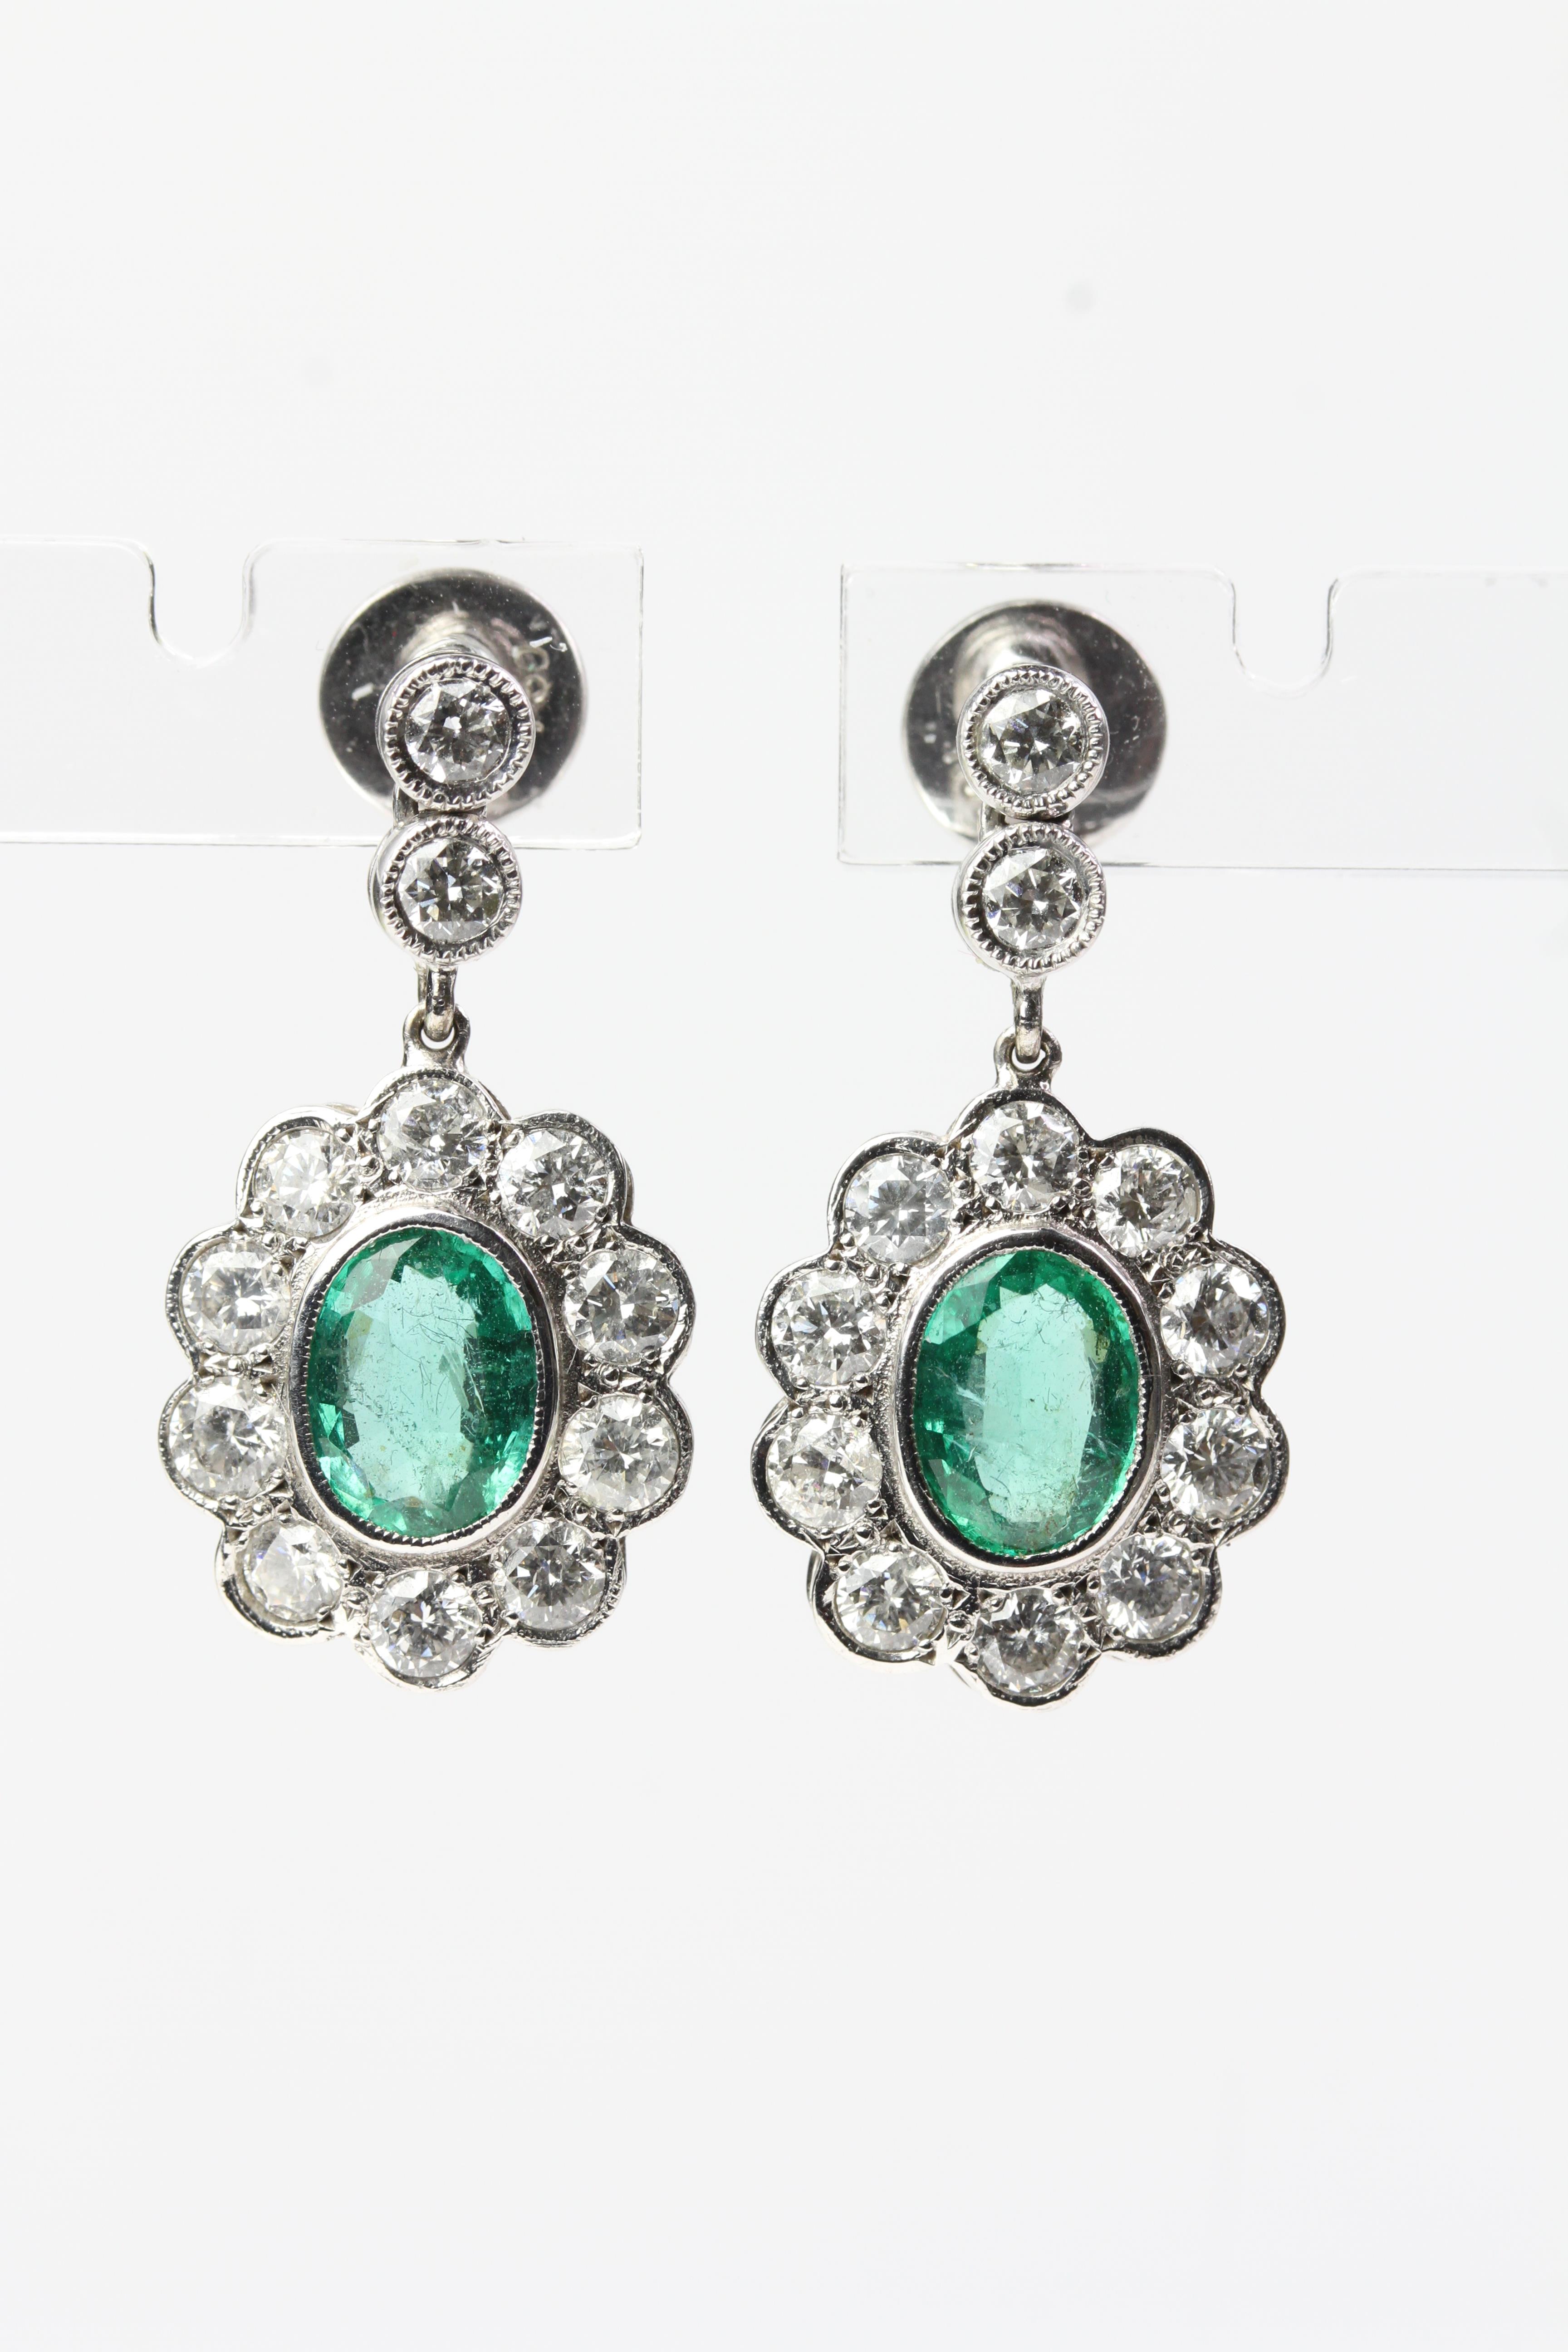 18WG Oval emerald and diamond cluster drop earrings suspended on 2 bezel set diamonds E 3.03 D2.01